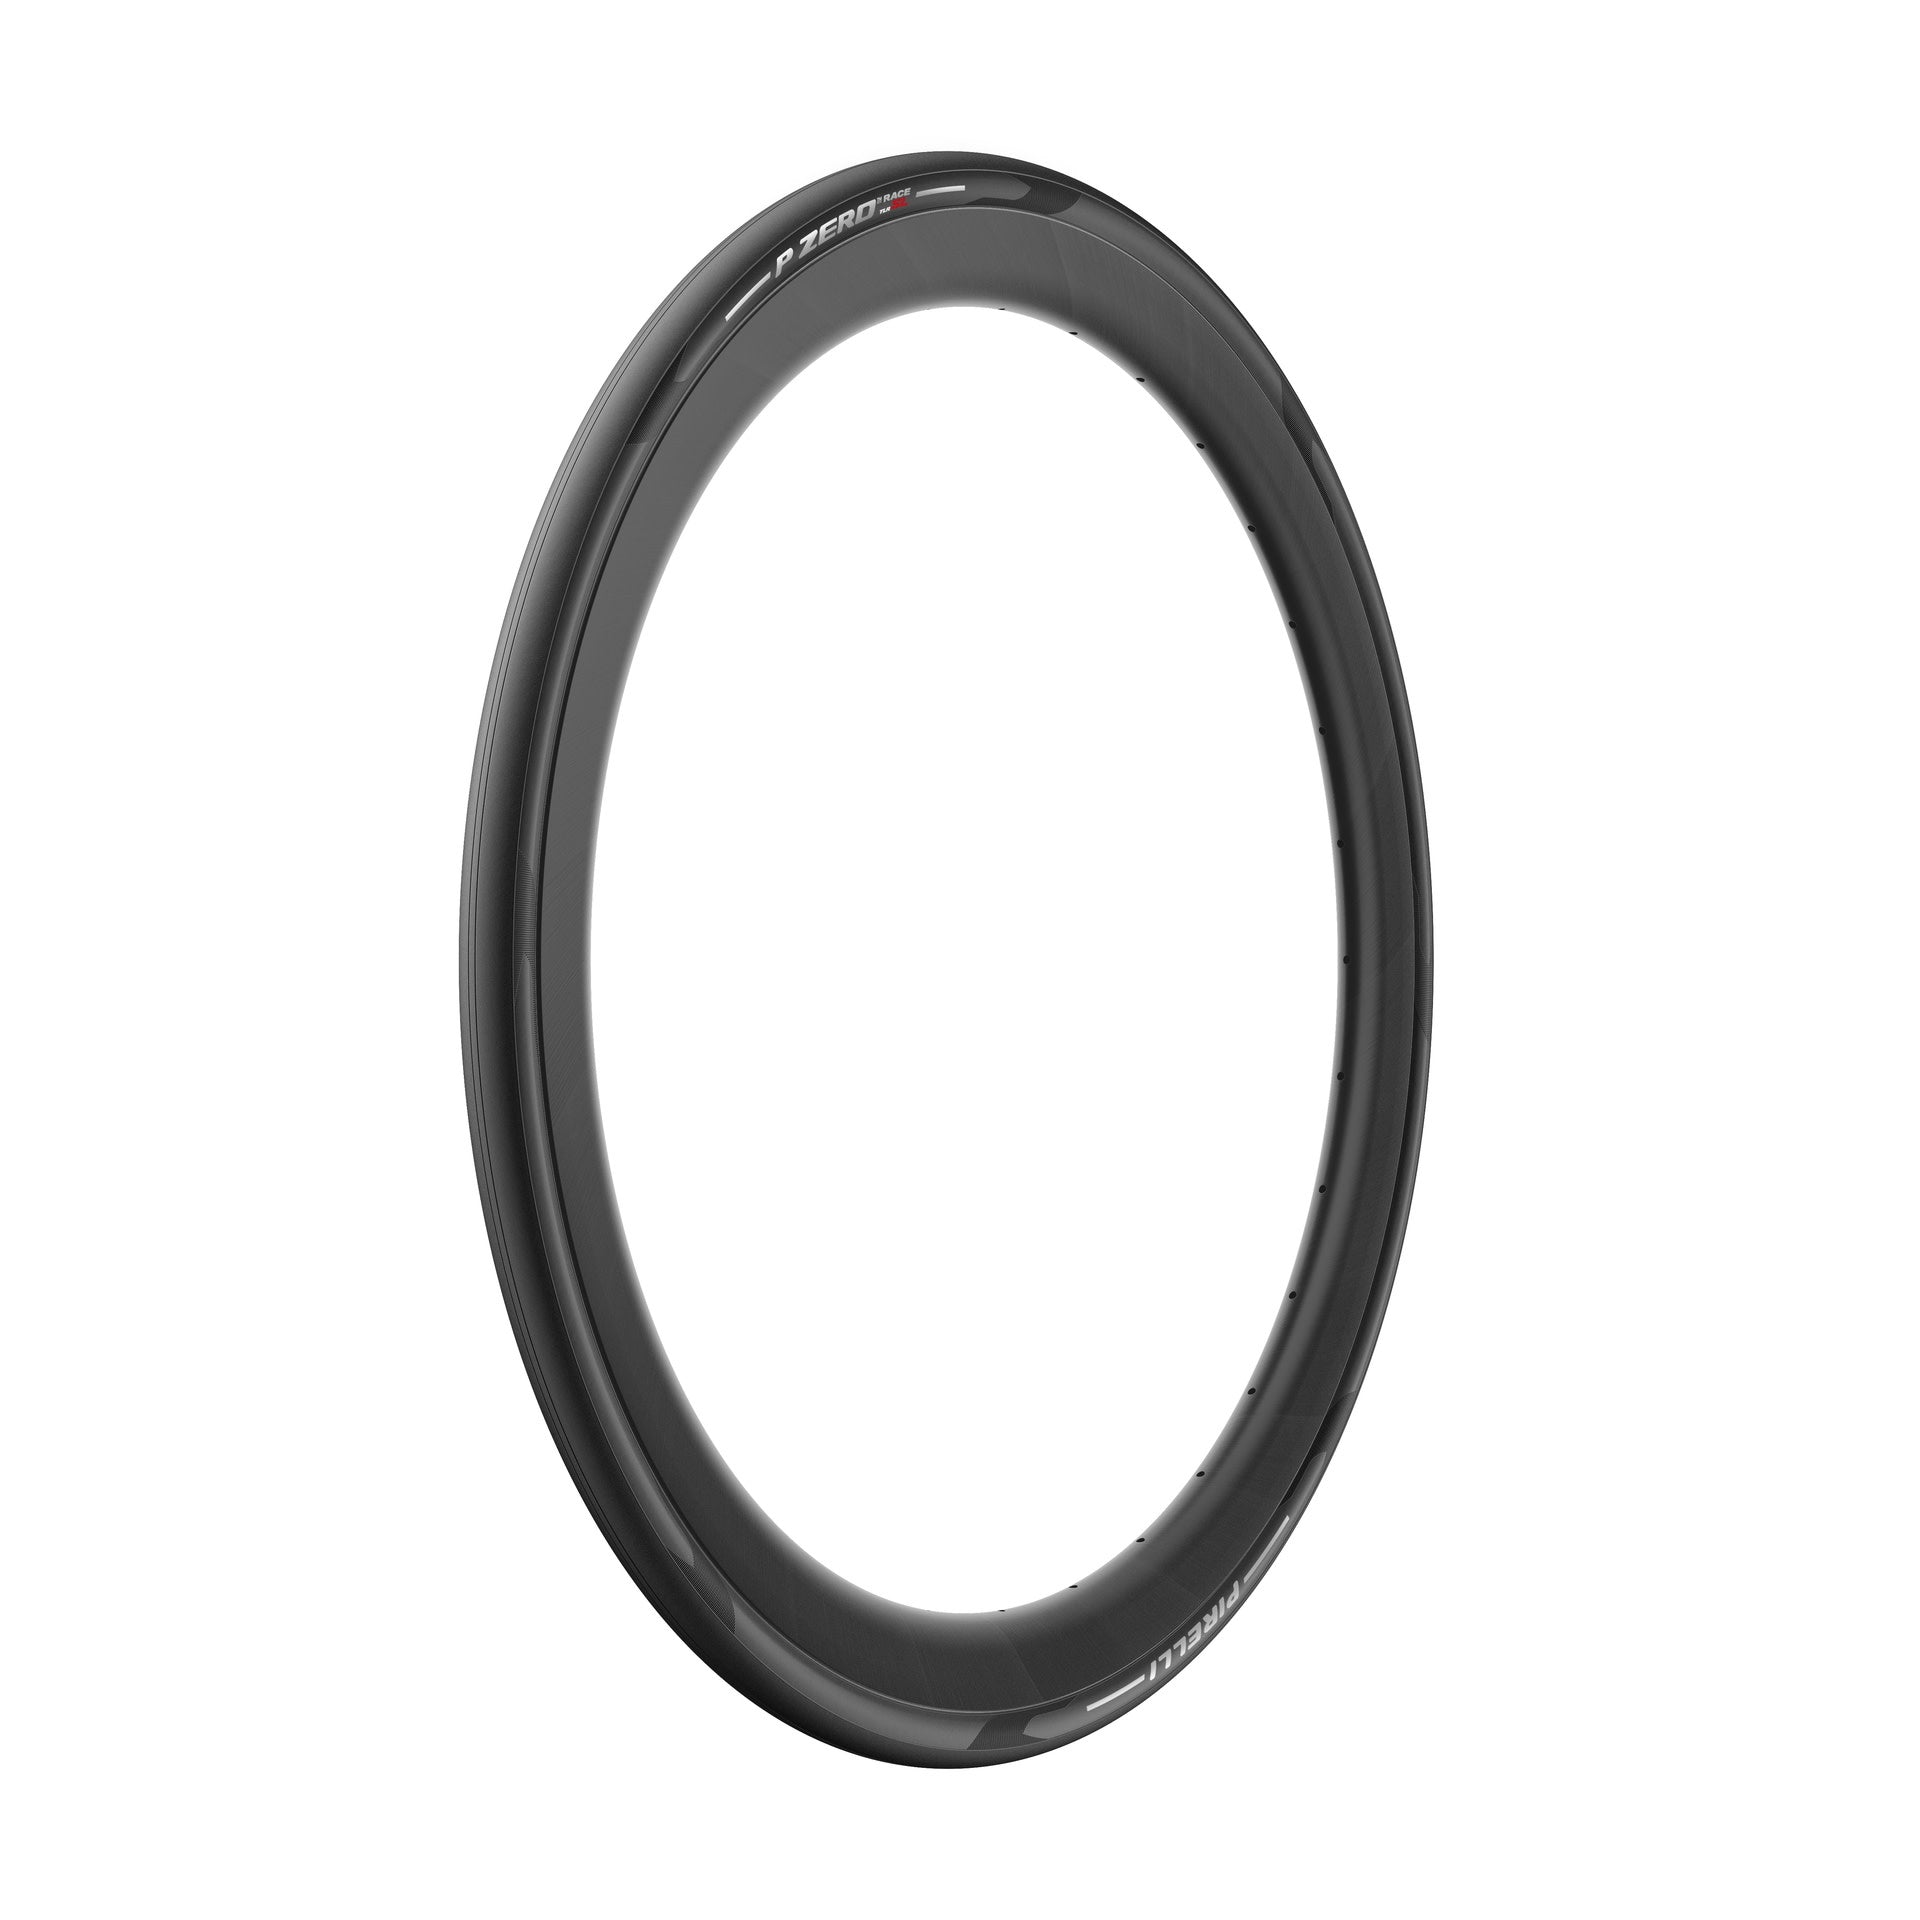 pirelli-folding-tyre-p-zero-race-tlr-sl-700x26c-black